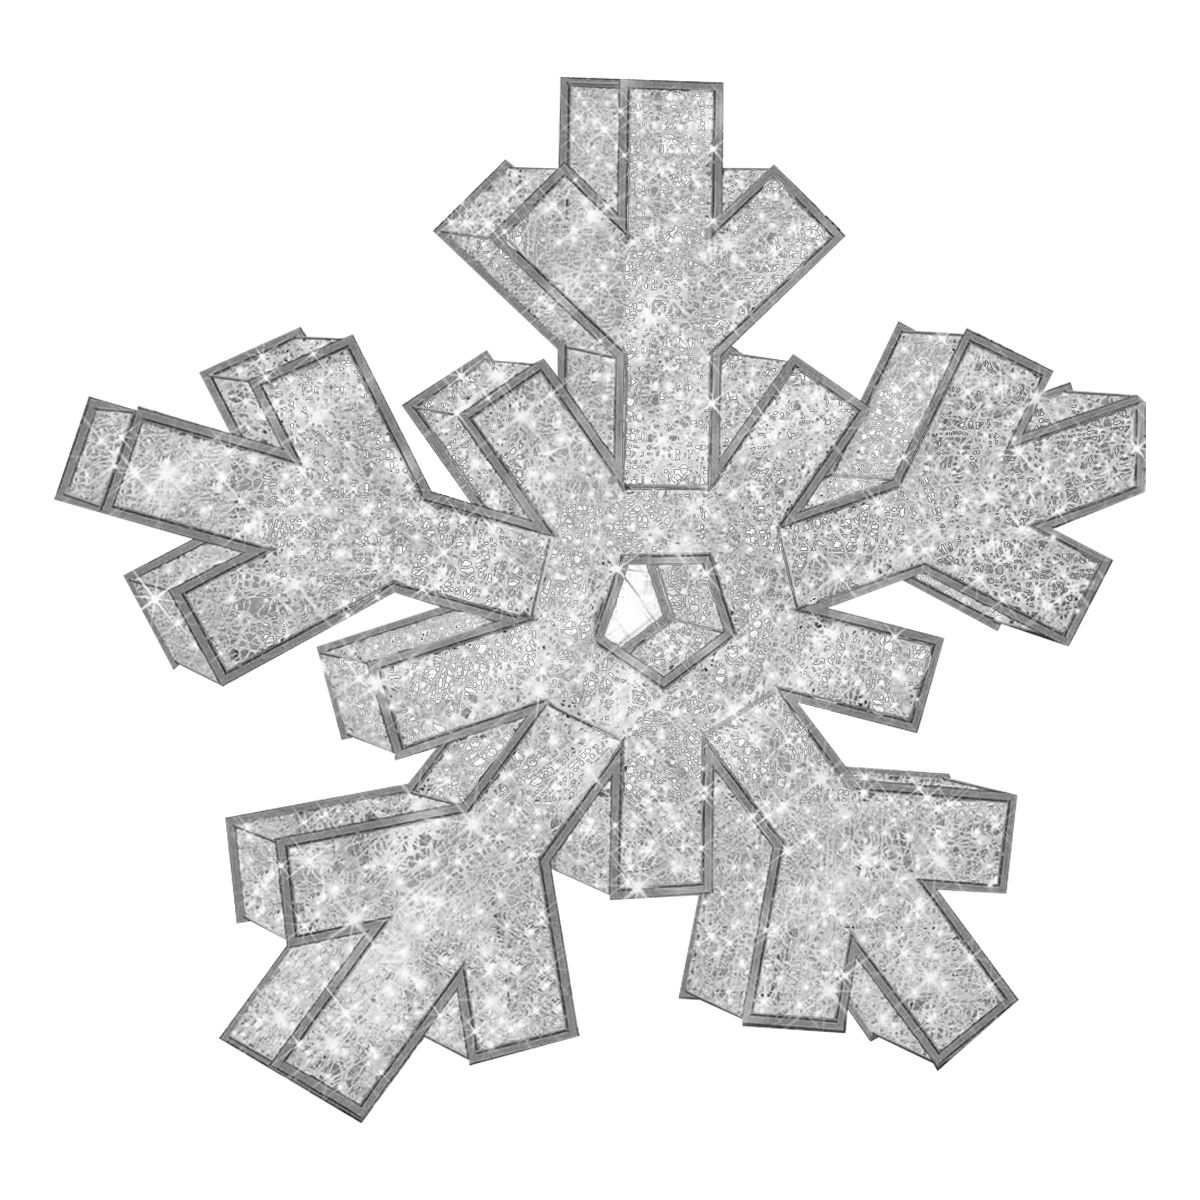 3D Snowflake, Silver, CW LED, Large